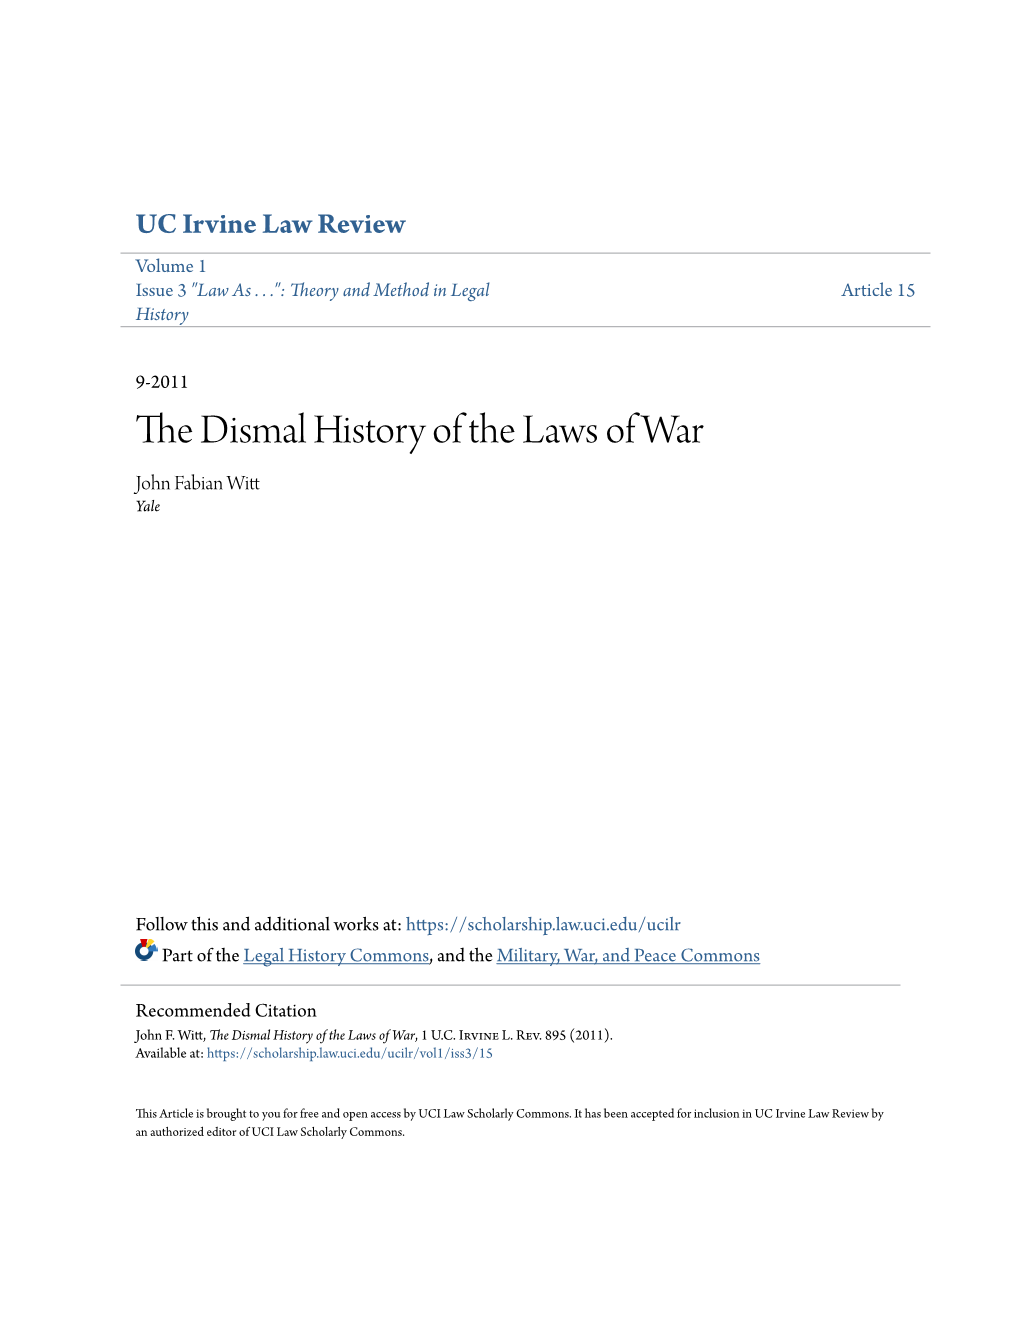 The Dismal History of the Laws of War John Fabian Witt Yale